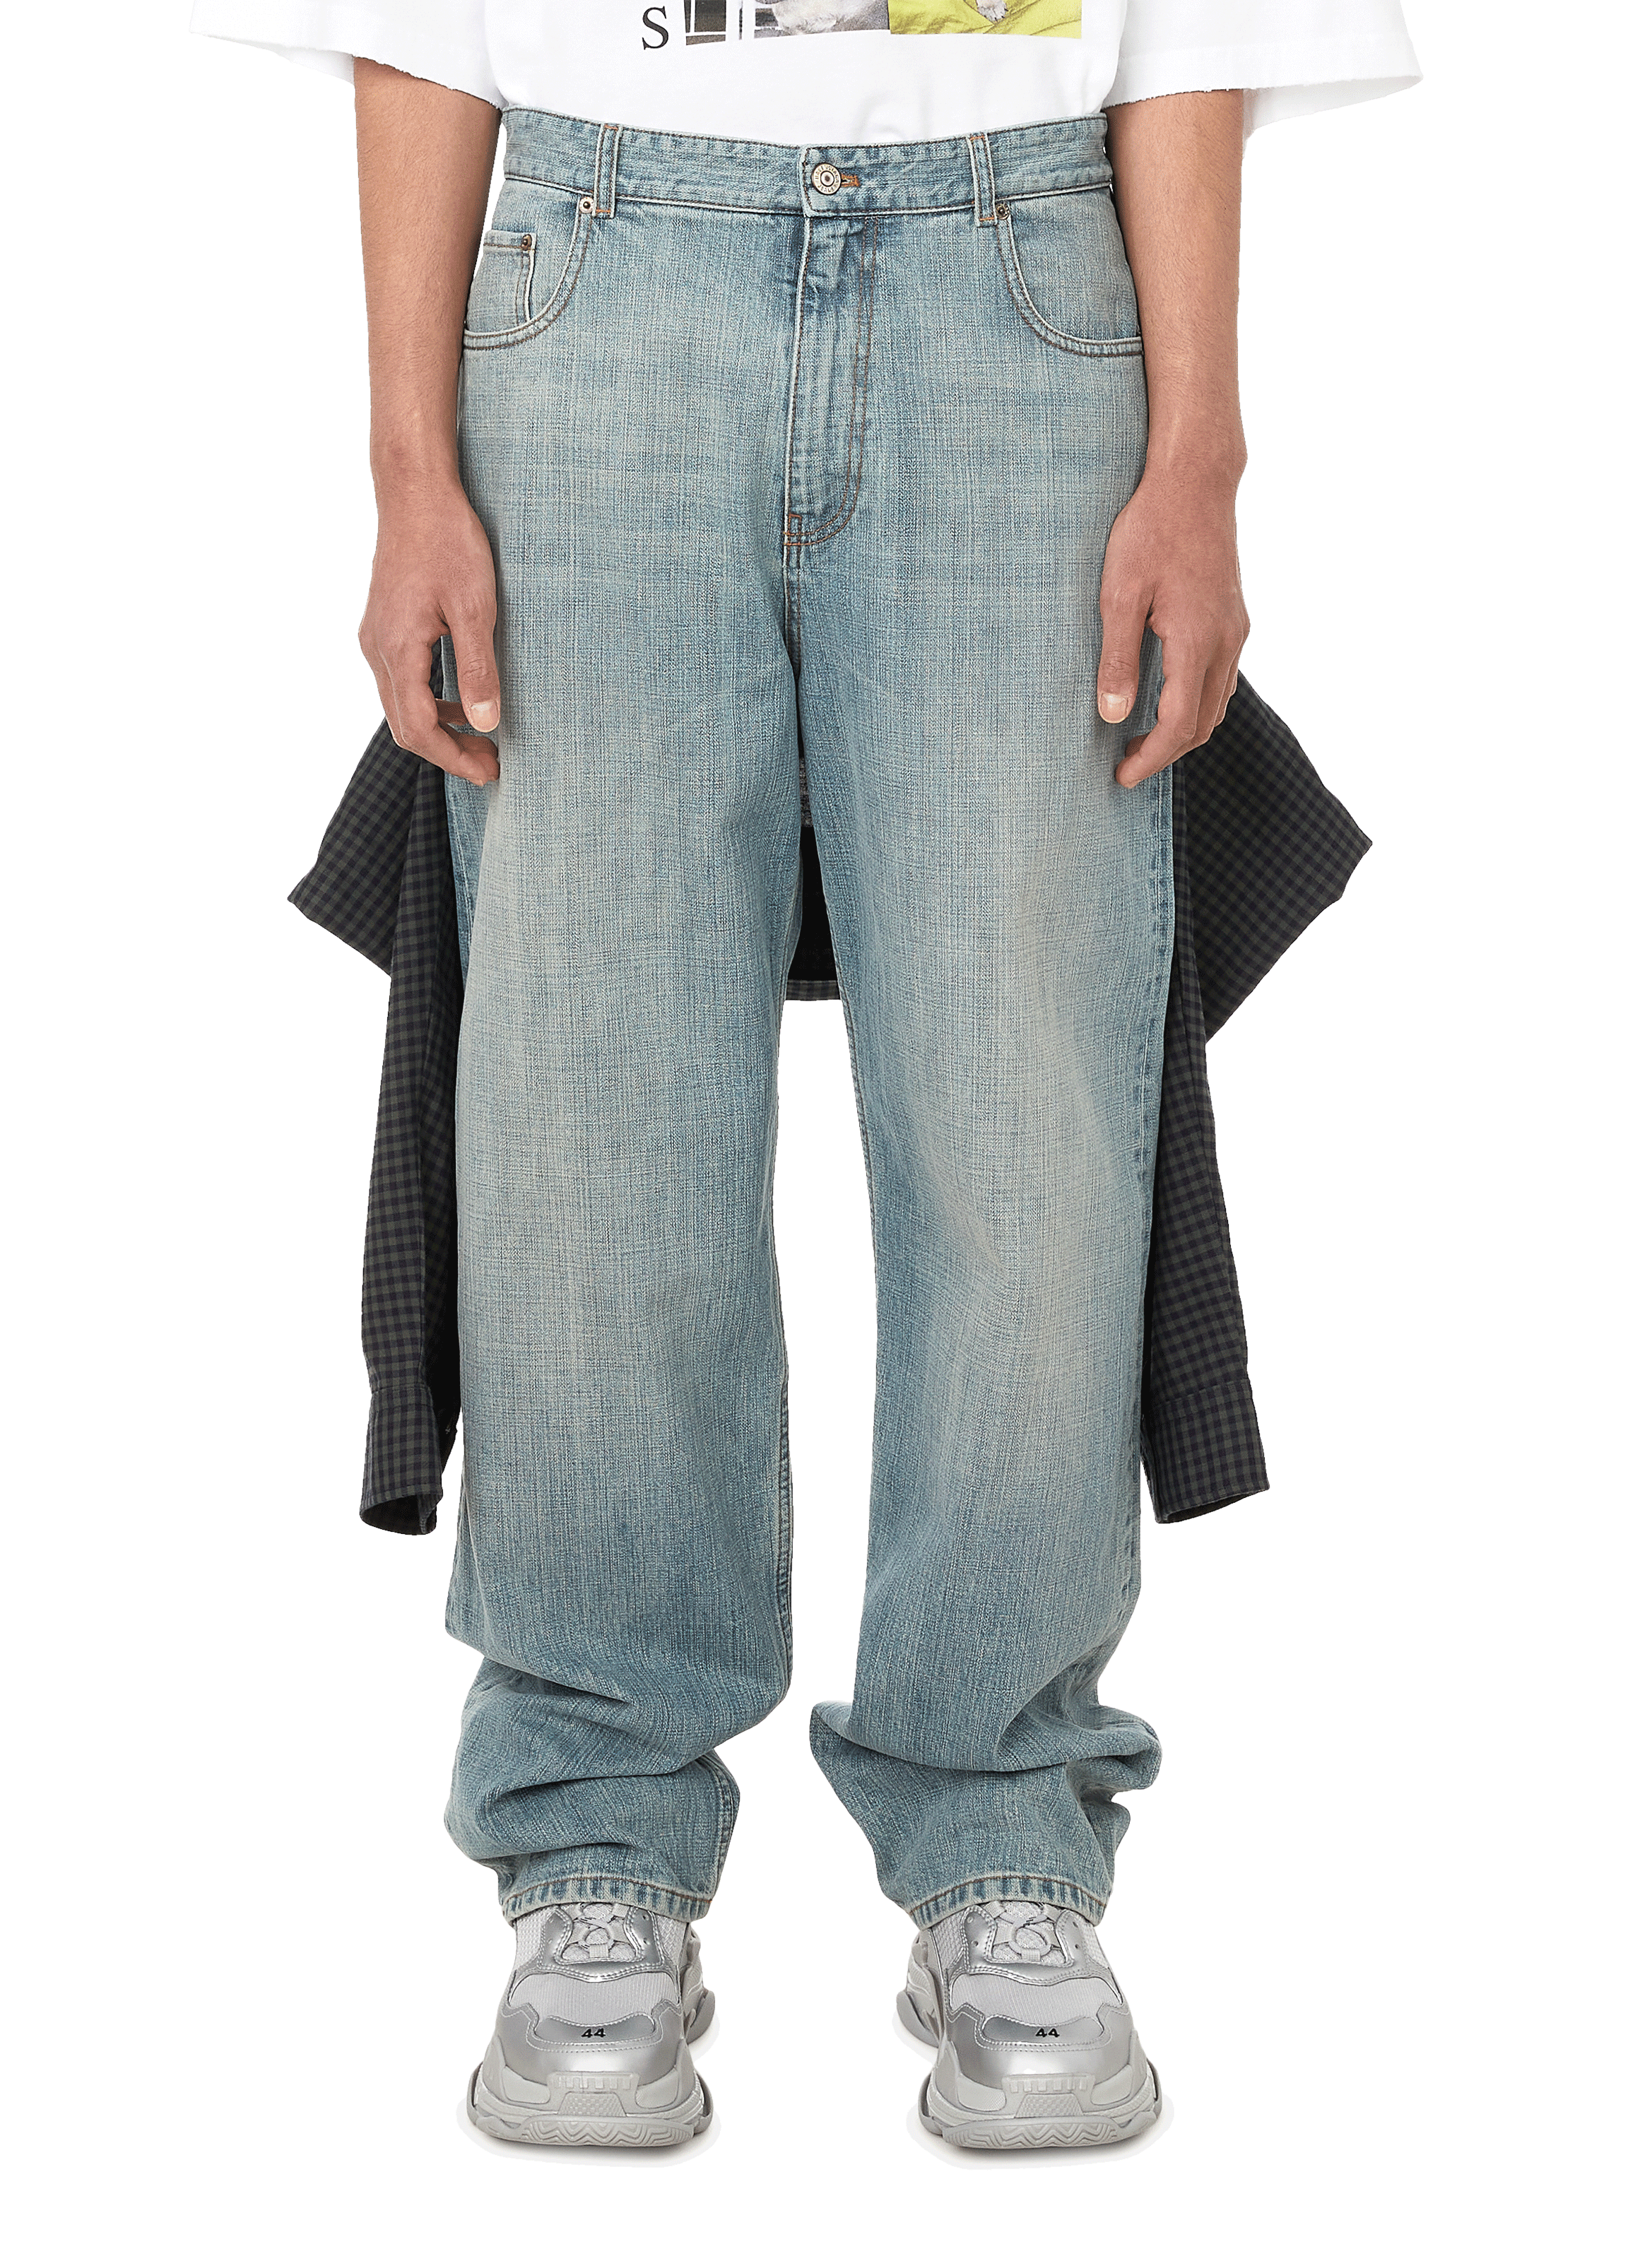 balenciaga mens bootcut jeans 31 930  eBay